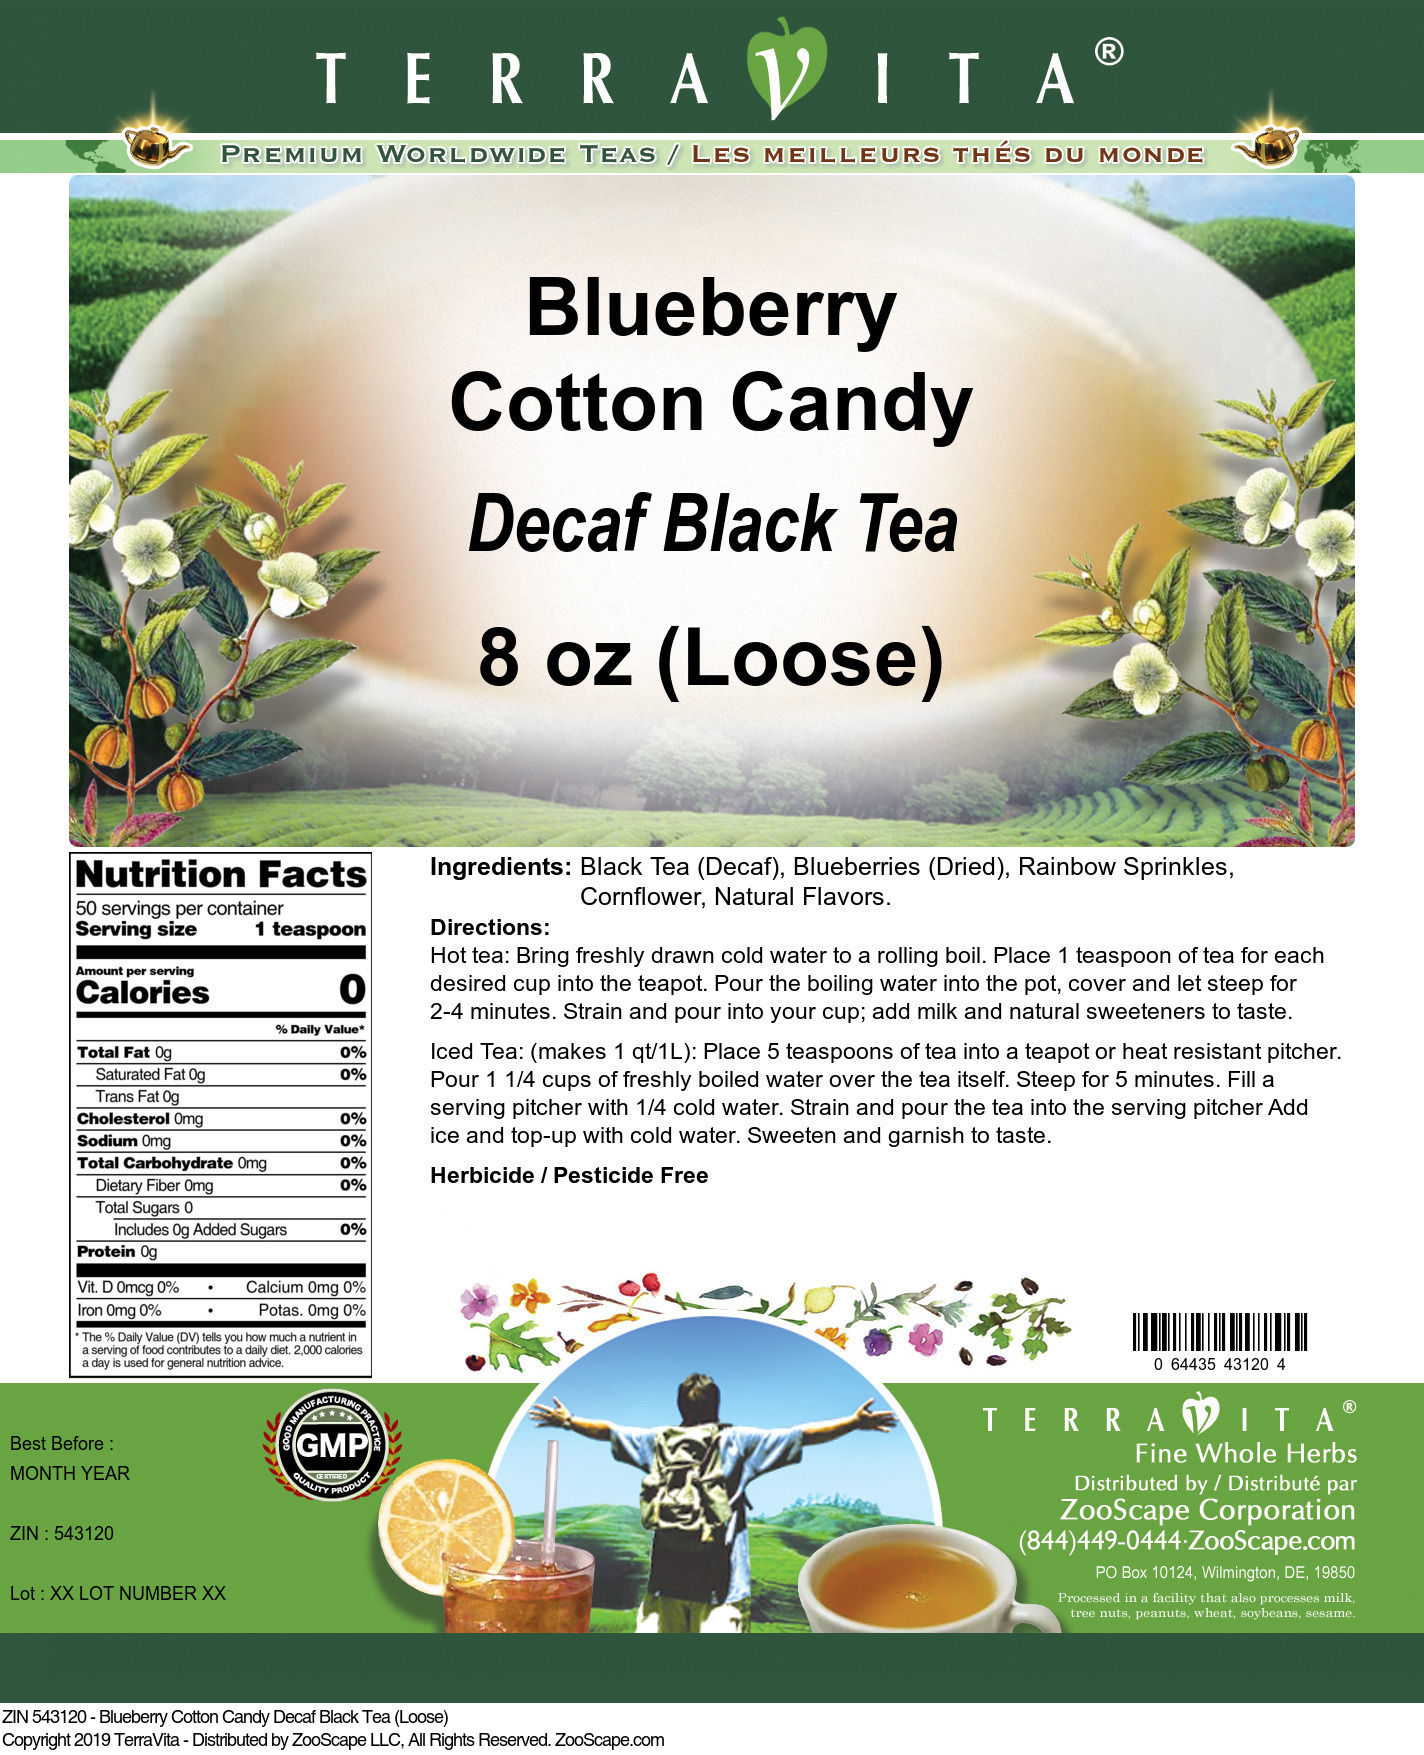 Blueberry Cotton Candy Decaf Black Tea (Loose) - Label